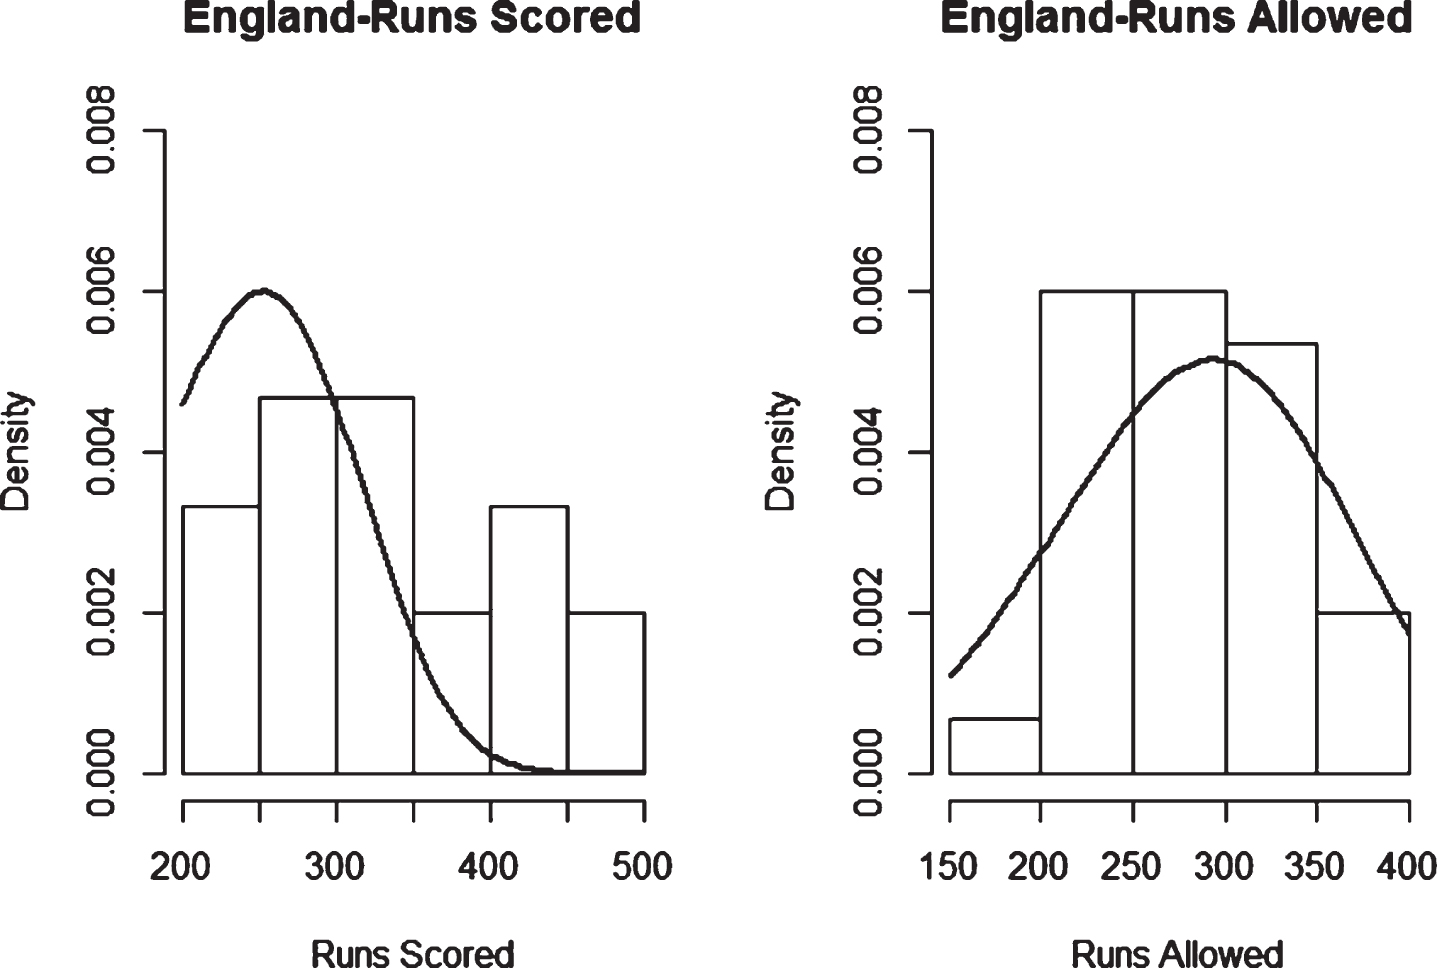 Weibull Distribution Fit for Runs Scored and Runs Allowed for England using Maximum Likelihood Method (ODI).